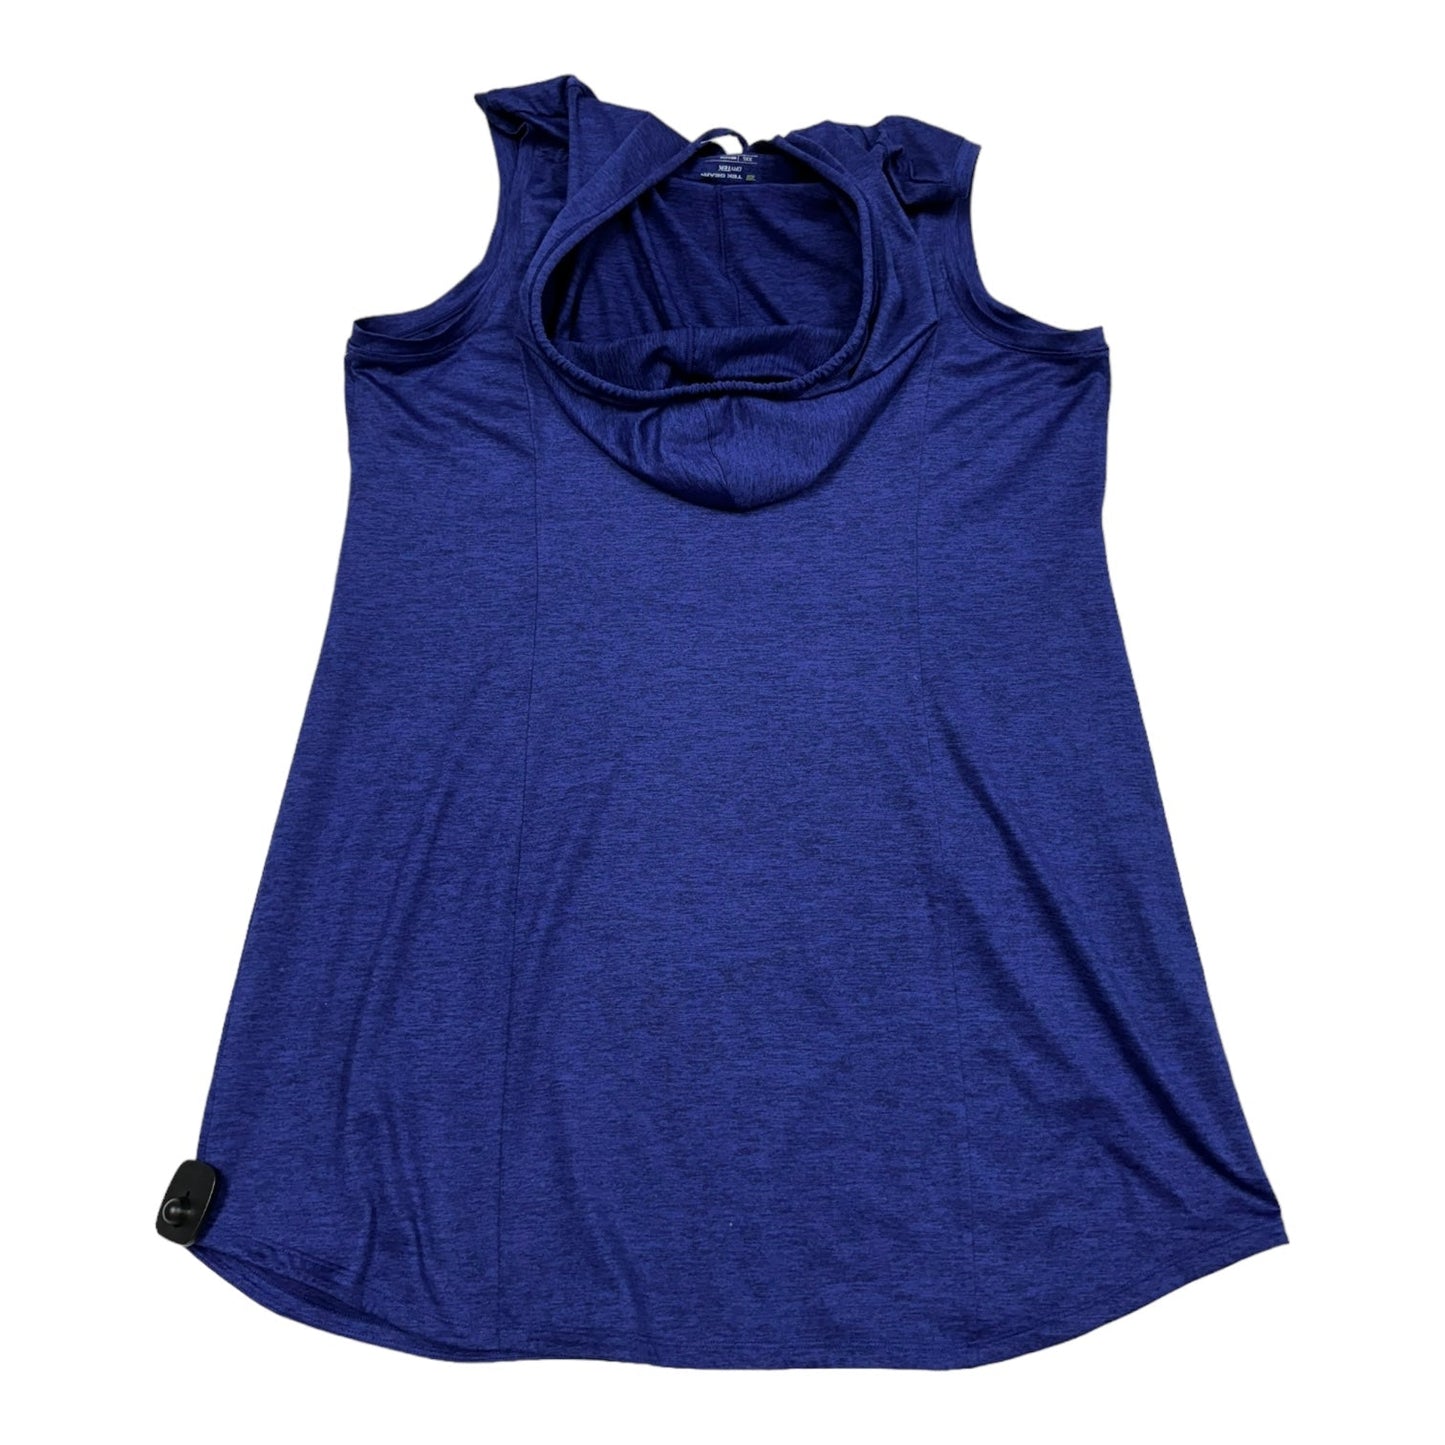 Blue Athletic Dress Tek Gear, Size 1x